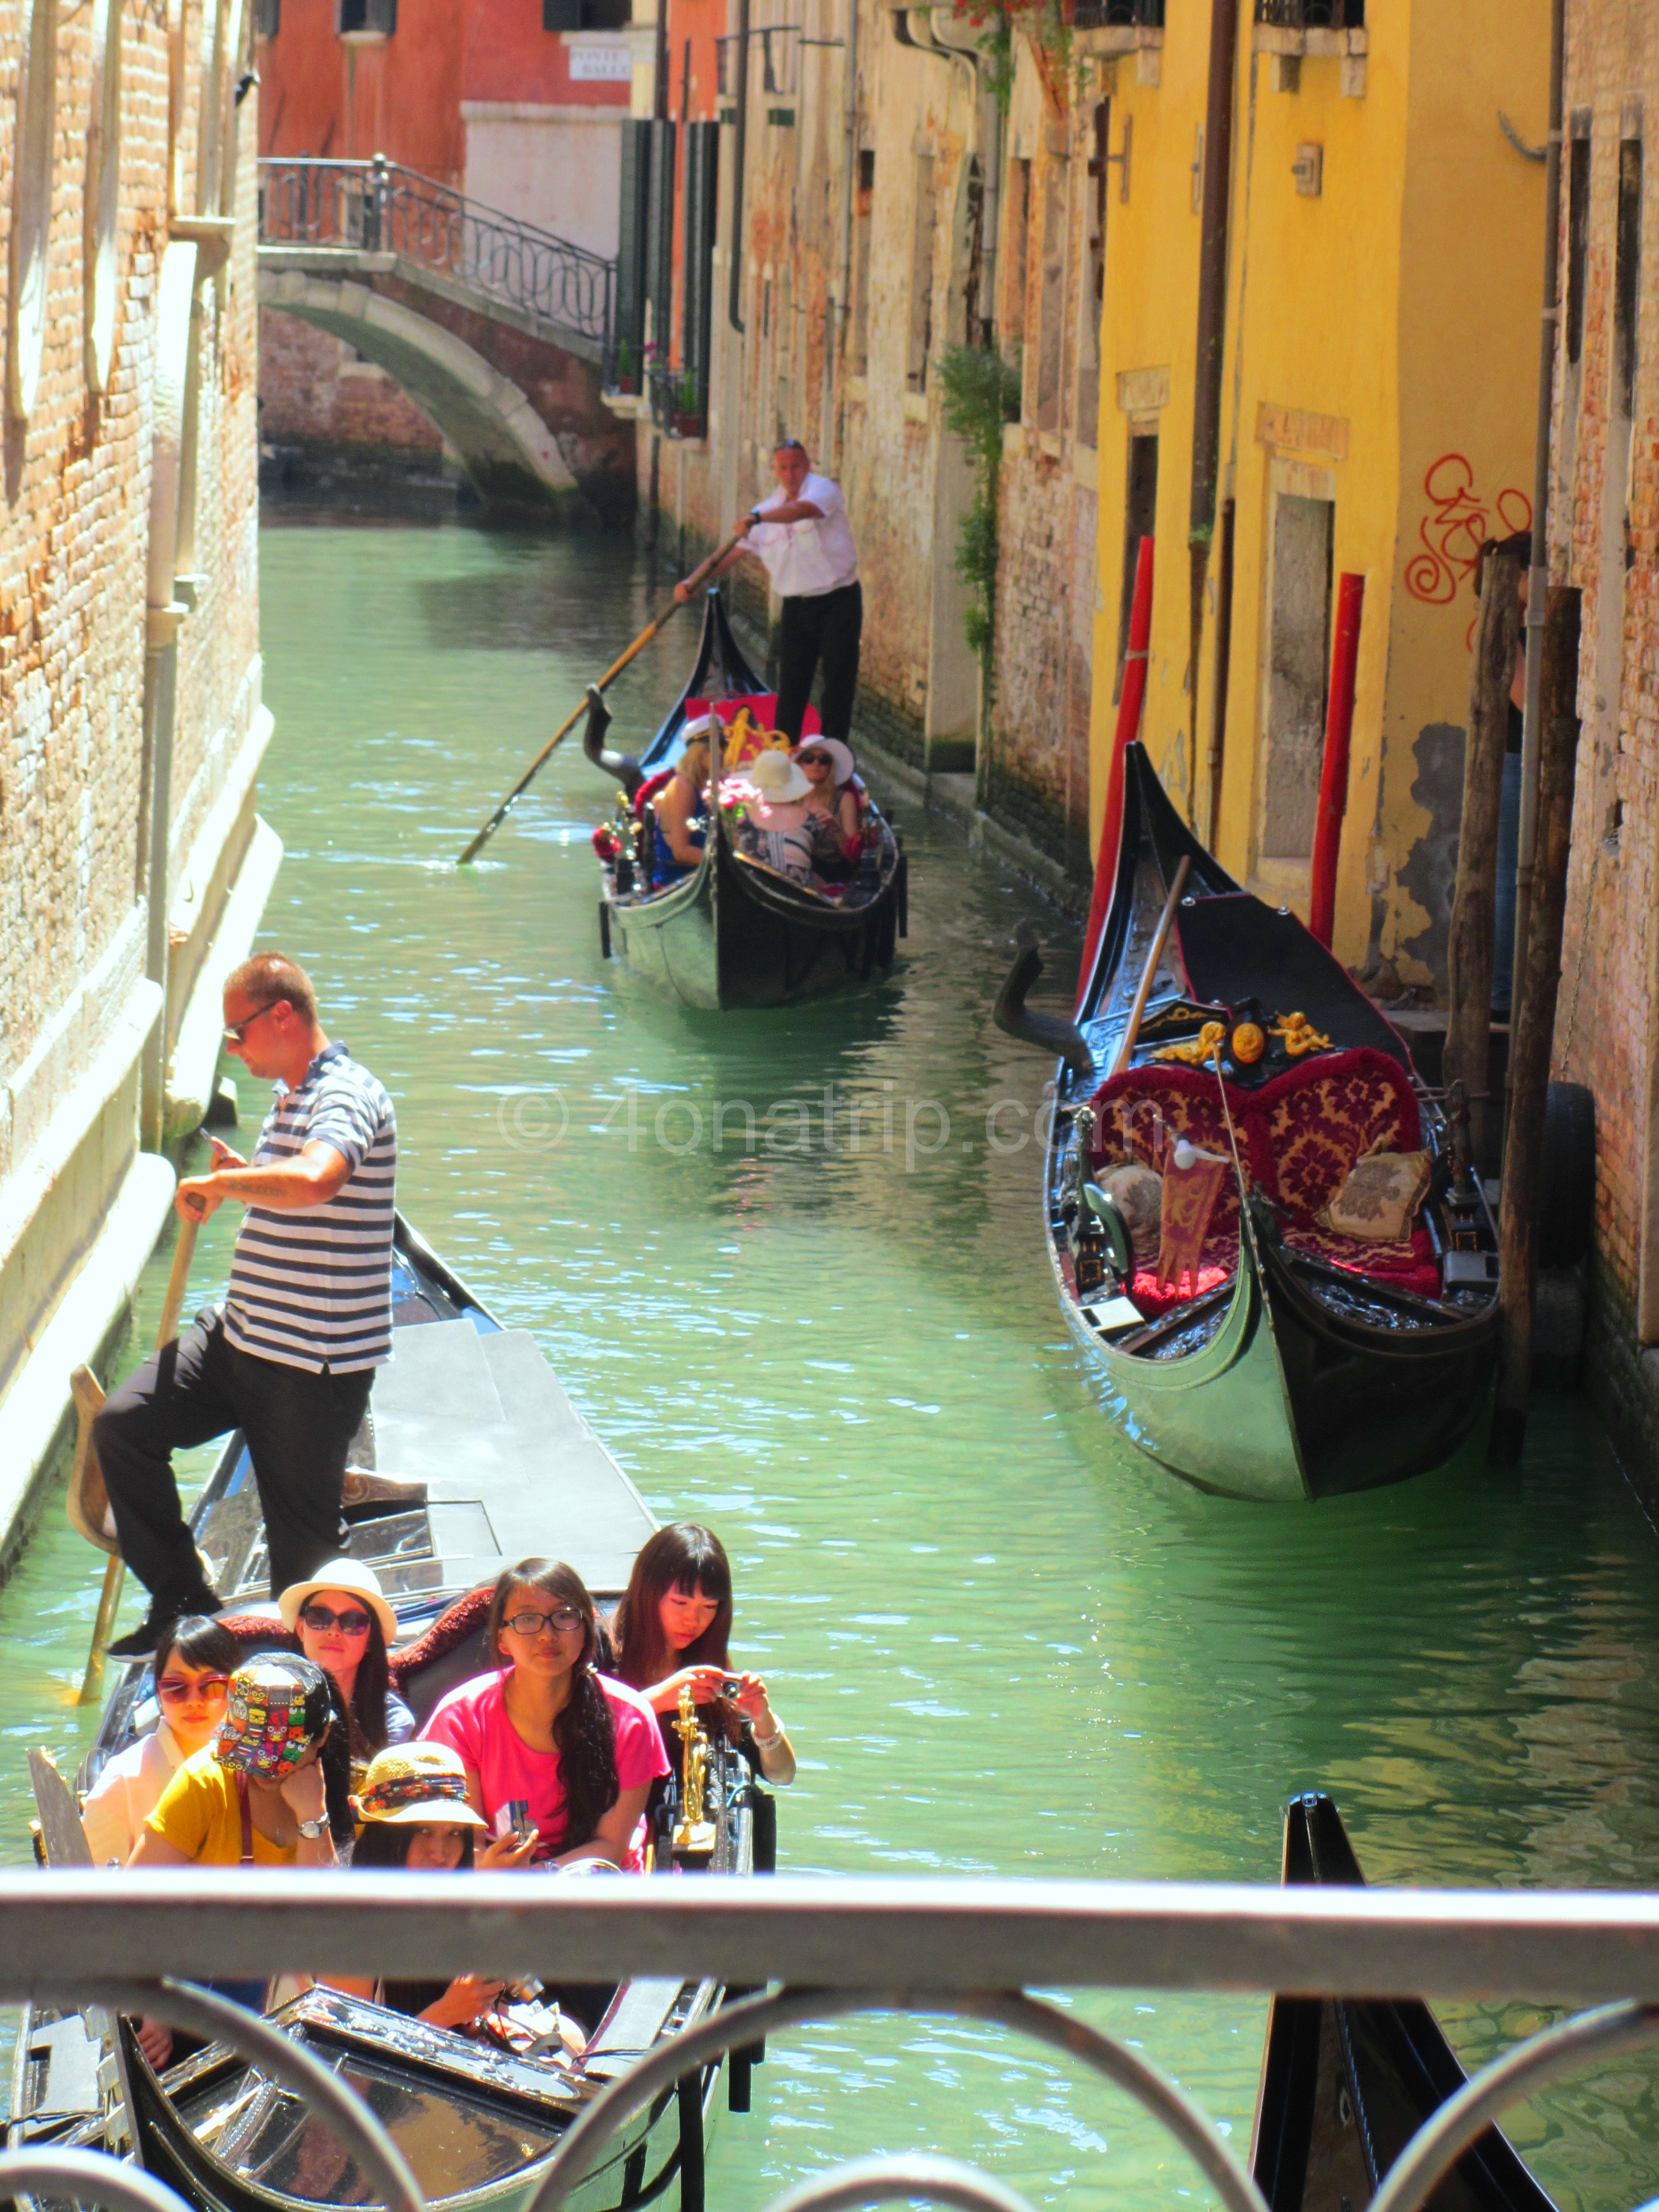 Views of Venice, Italy